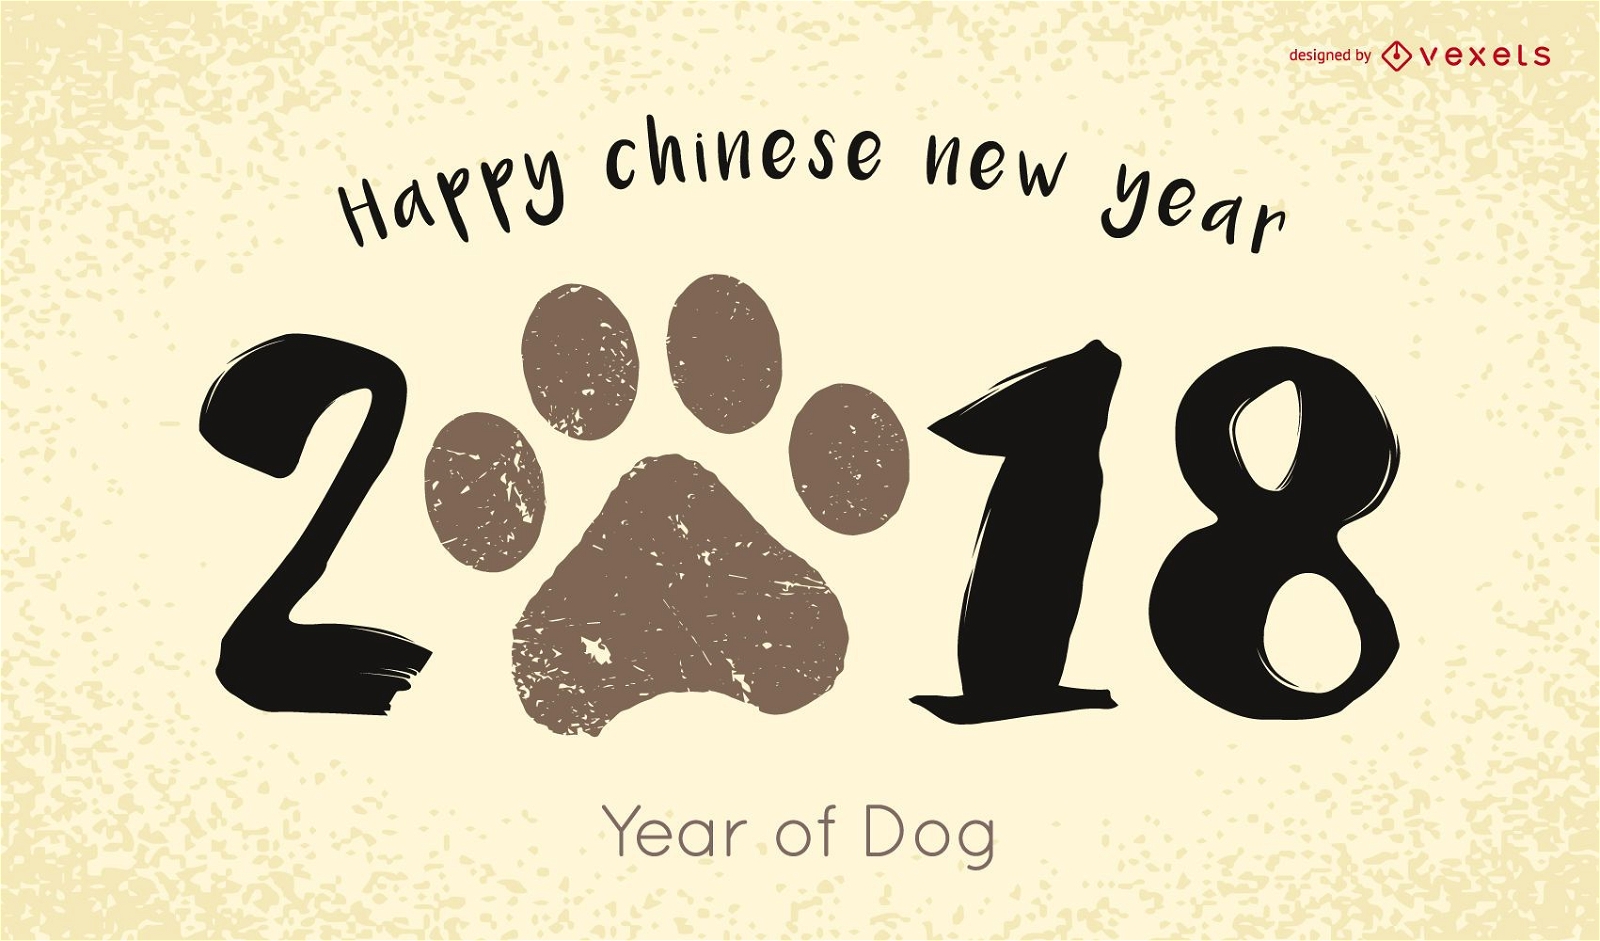 Ano Novo Chinês 2018